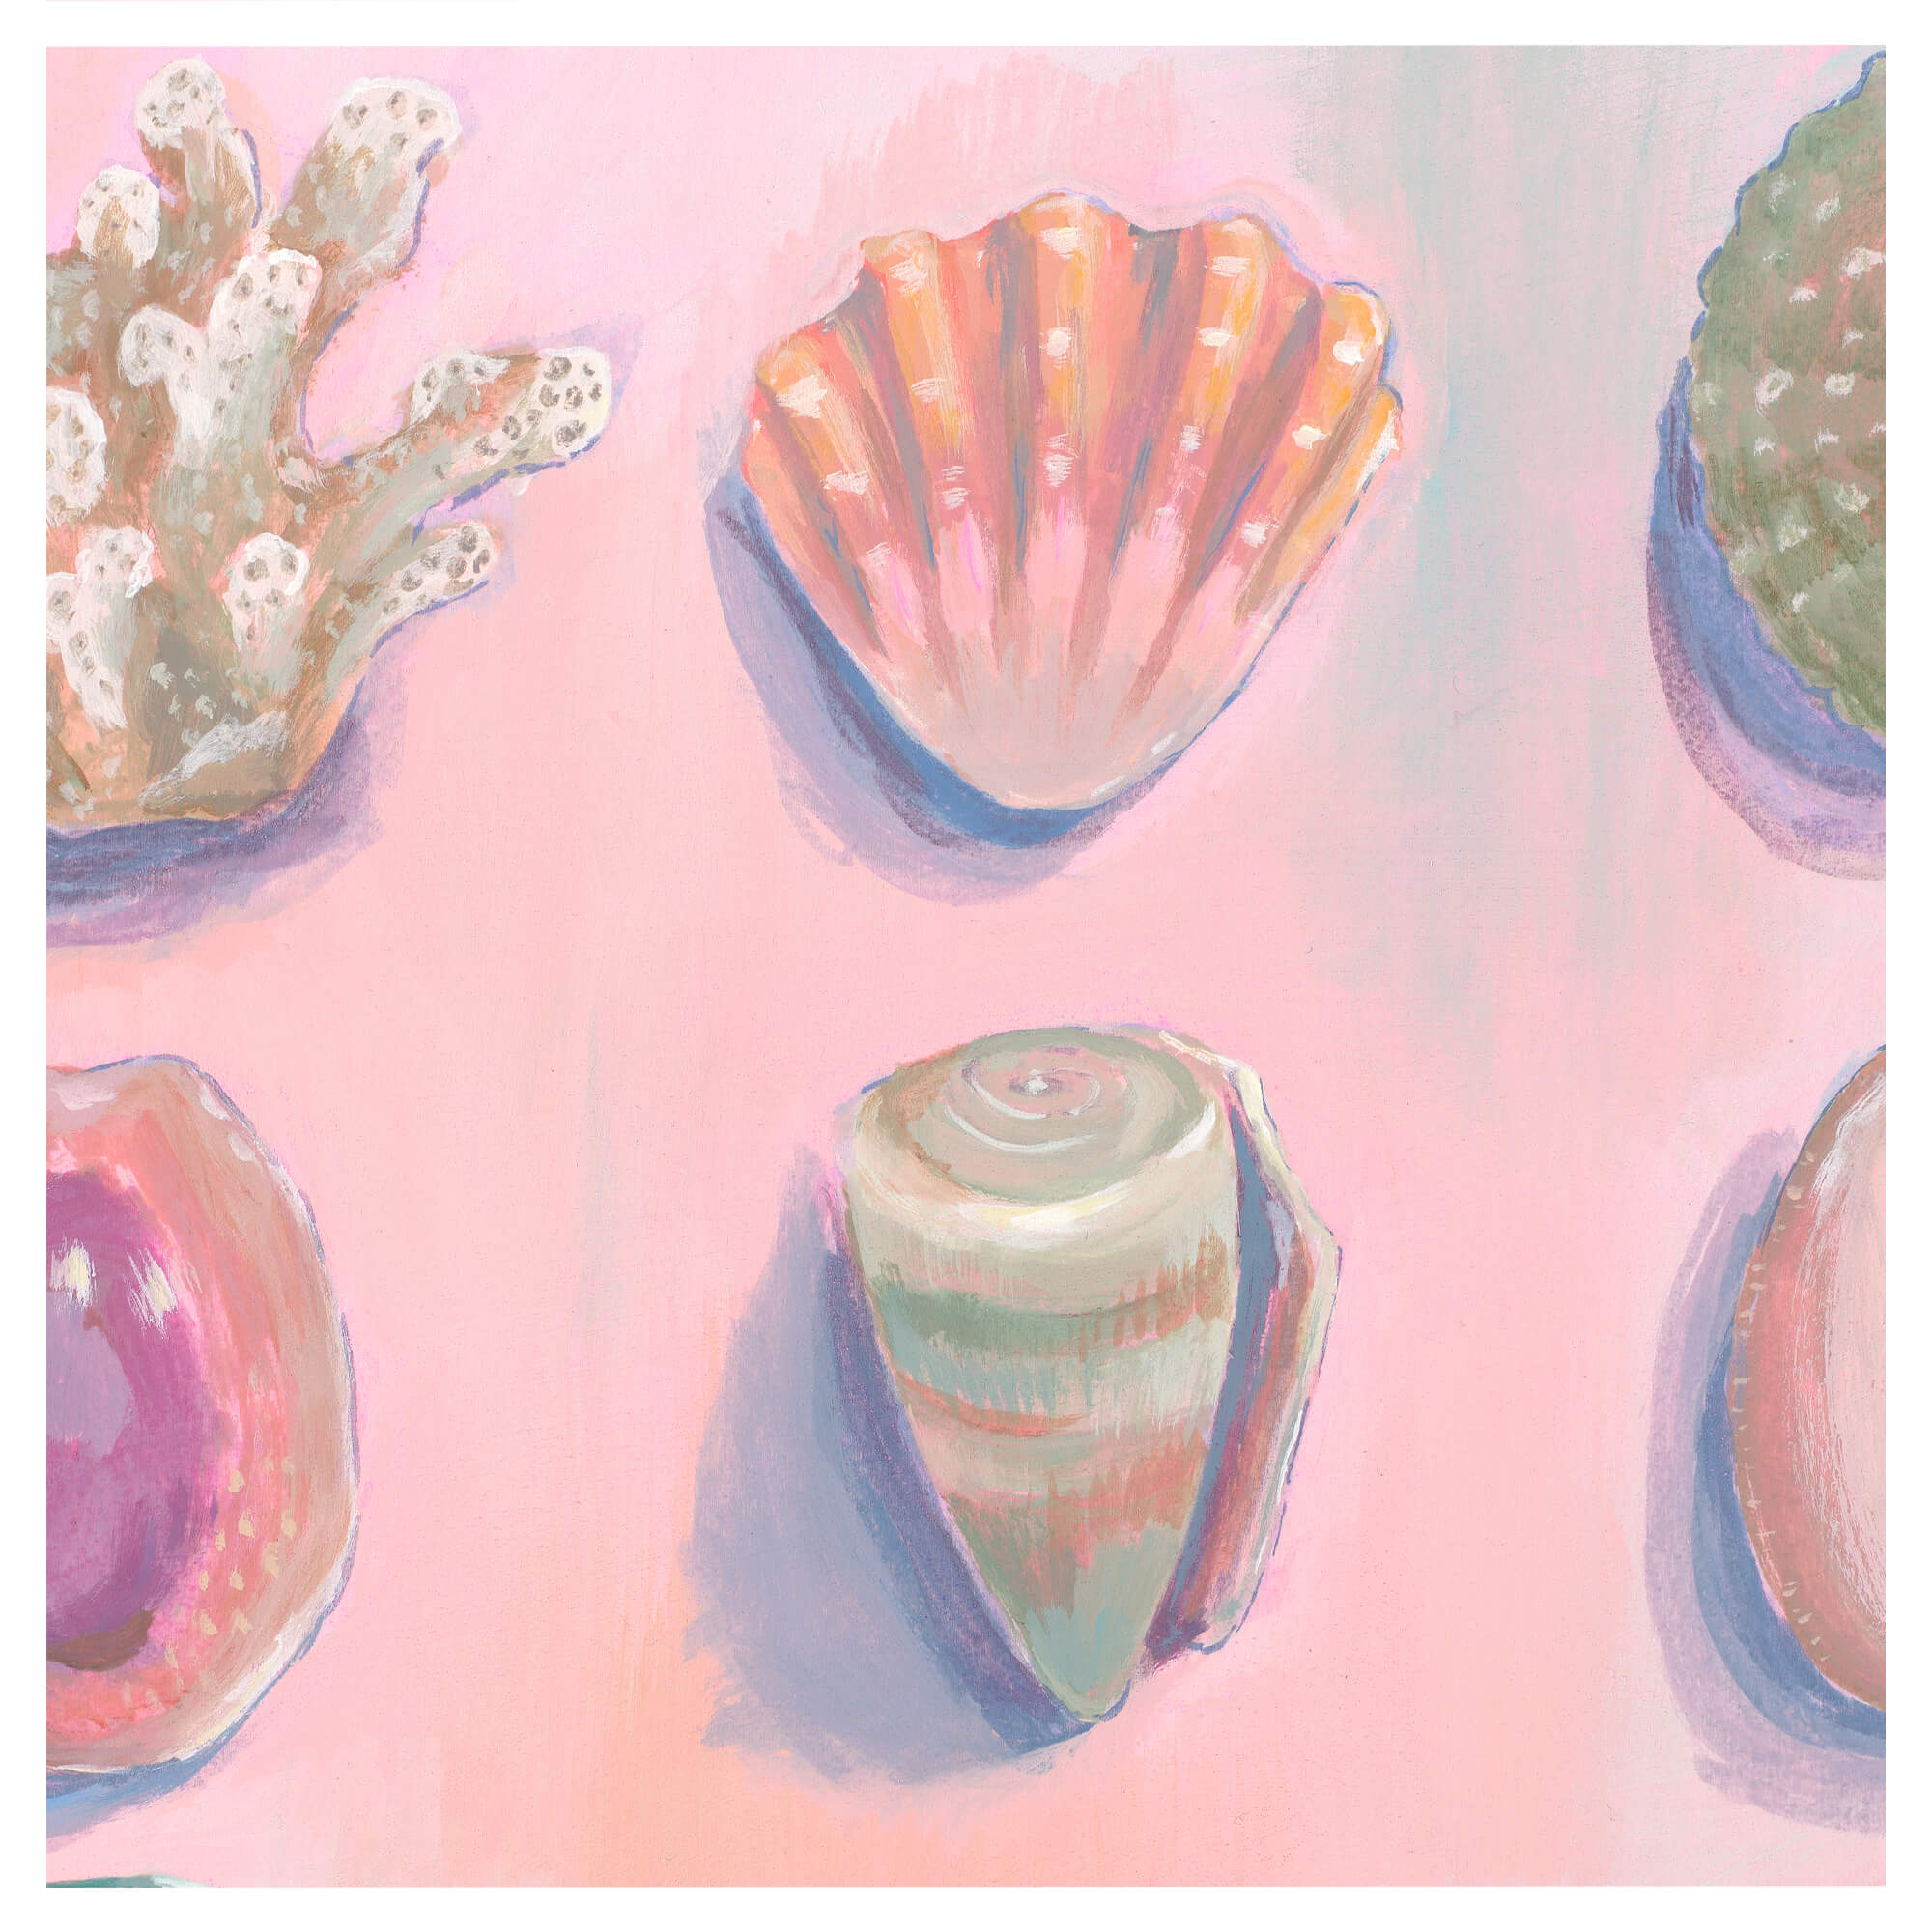 Seashells with hues of pastel pink by Hawaii artist Lindsay Wilkins